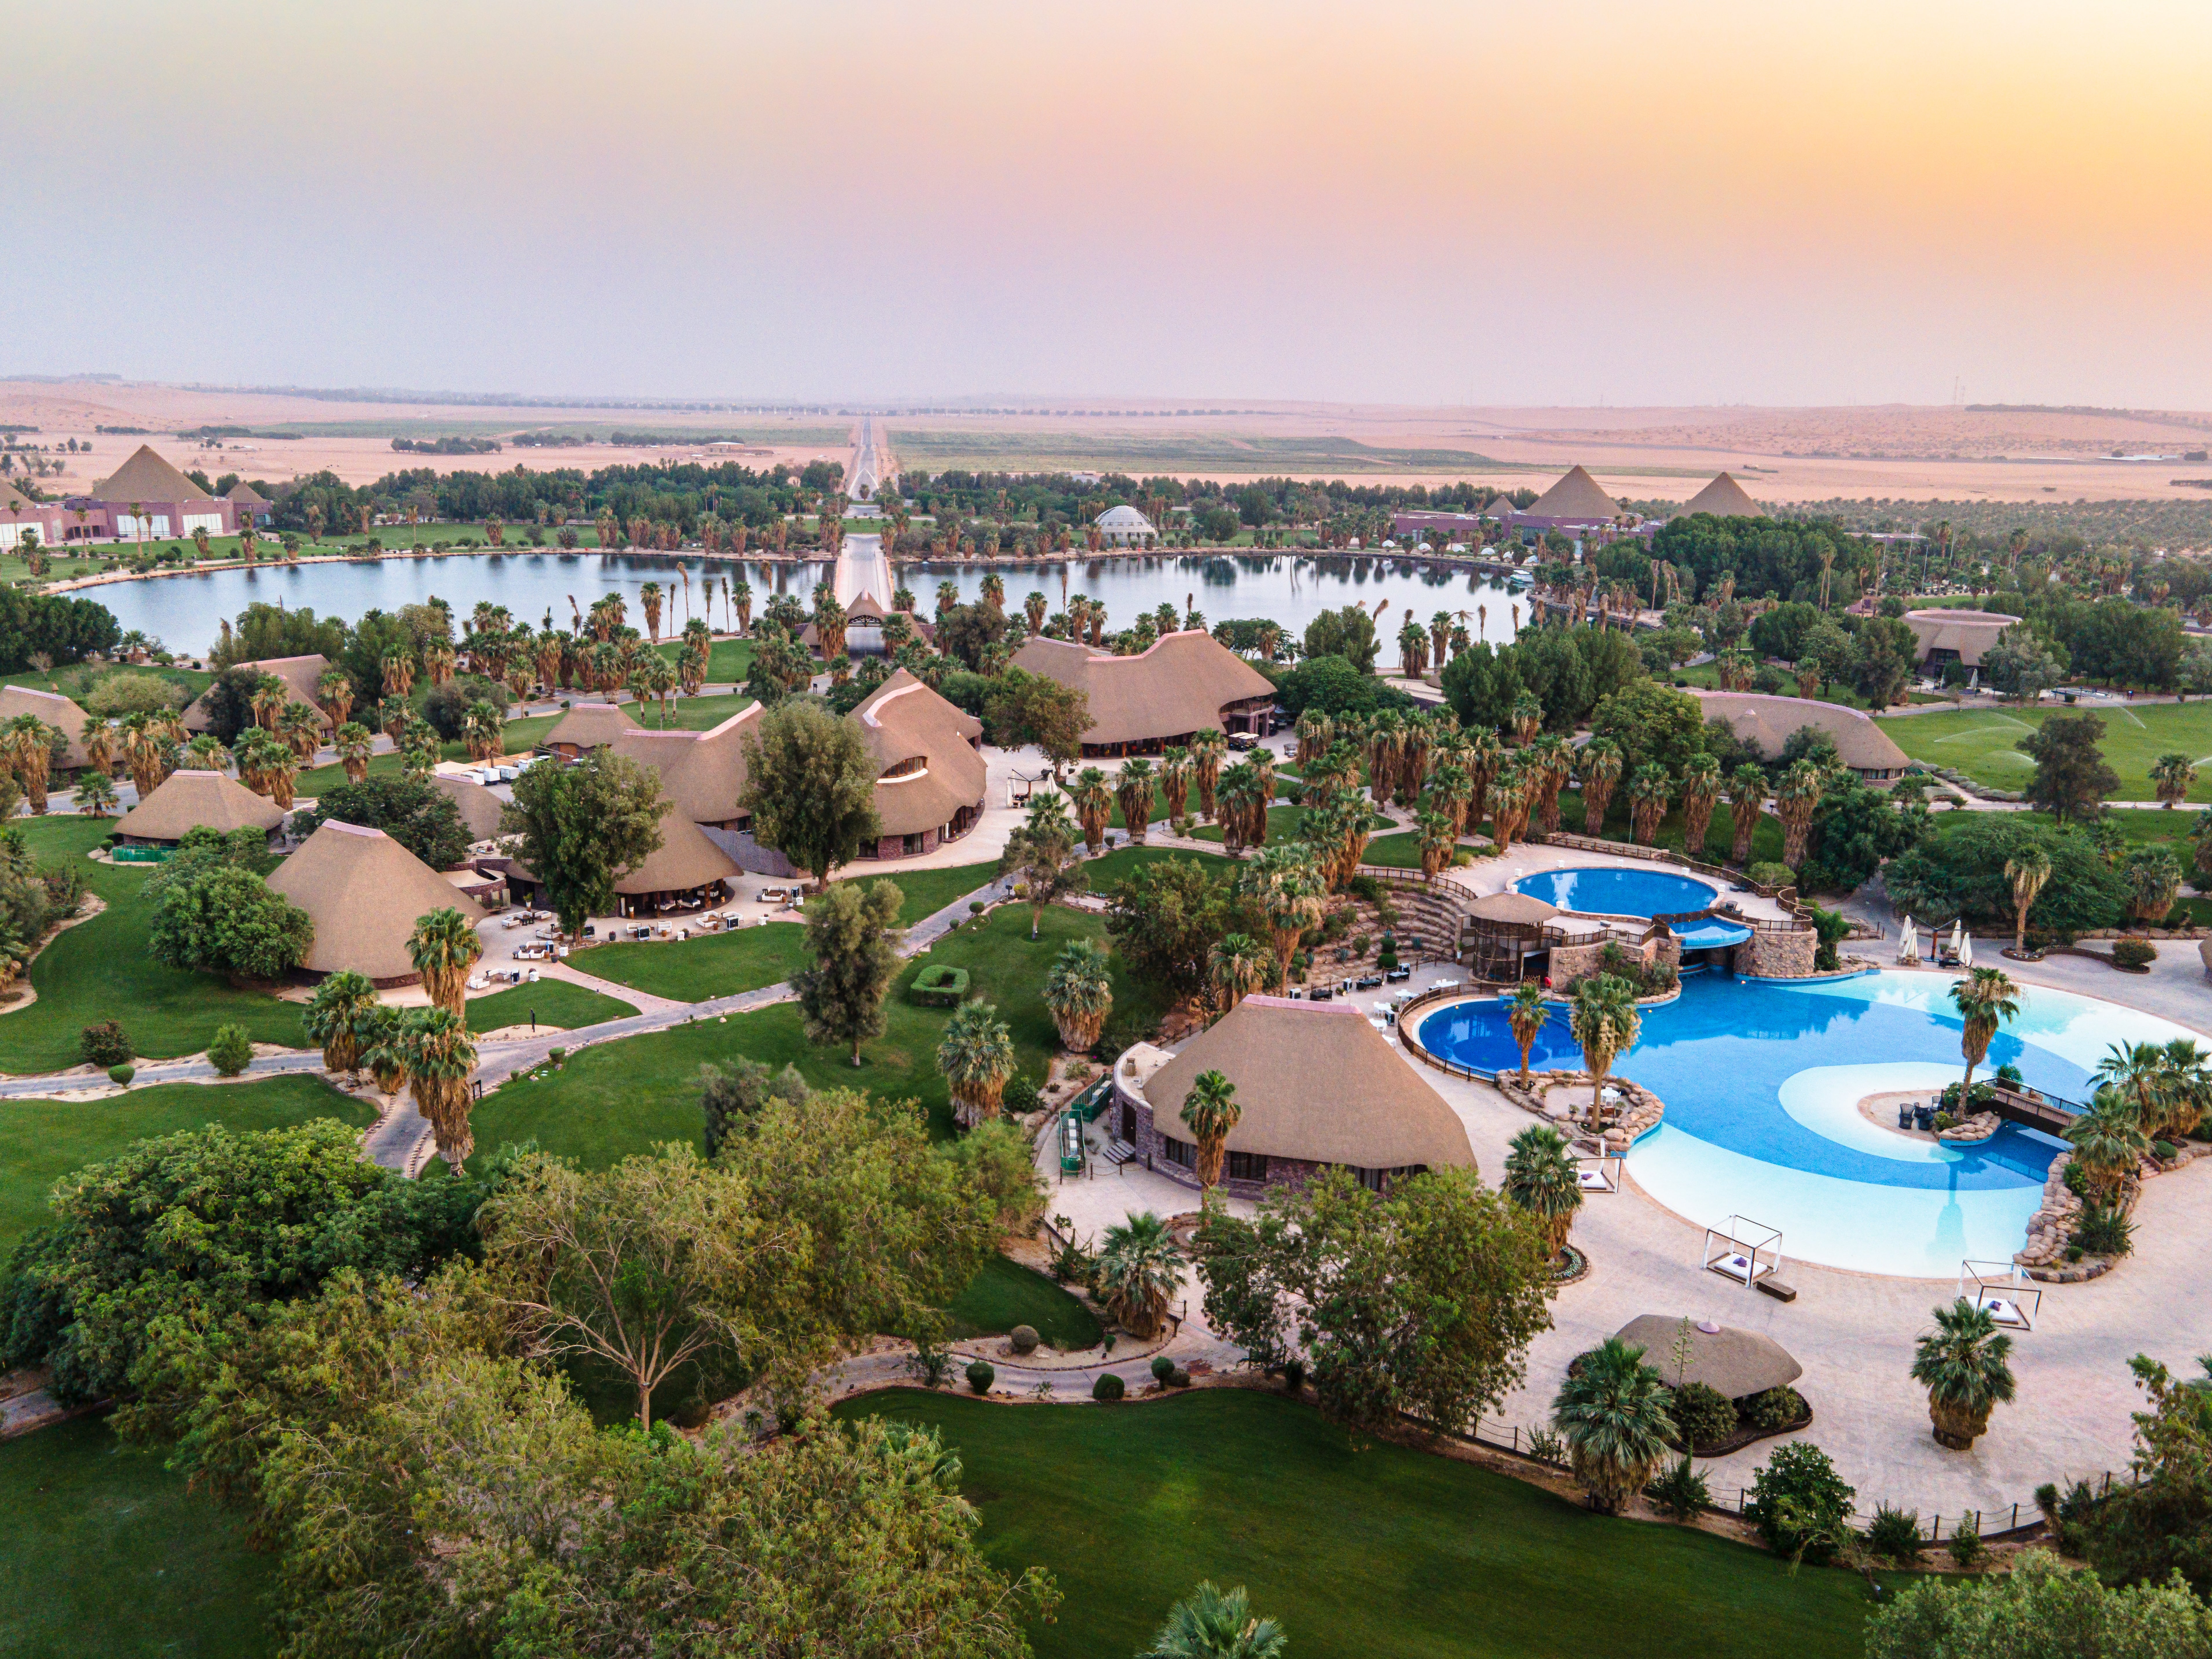 Combine nature and nurture at Nofa Riyadh, where you can go lake-swimming and visit a safari park